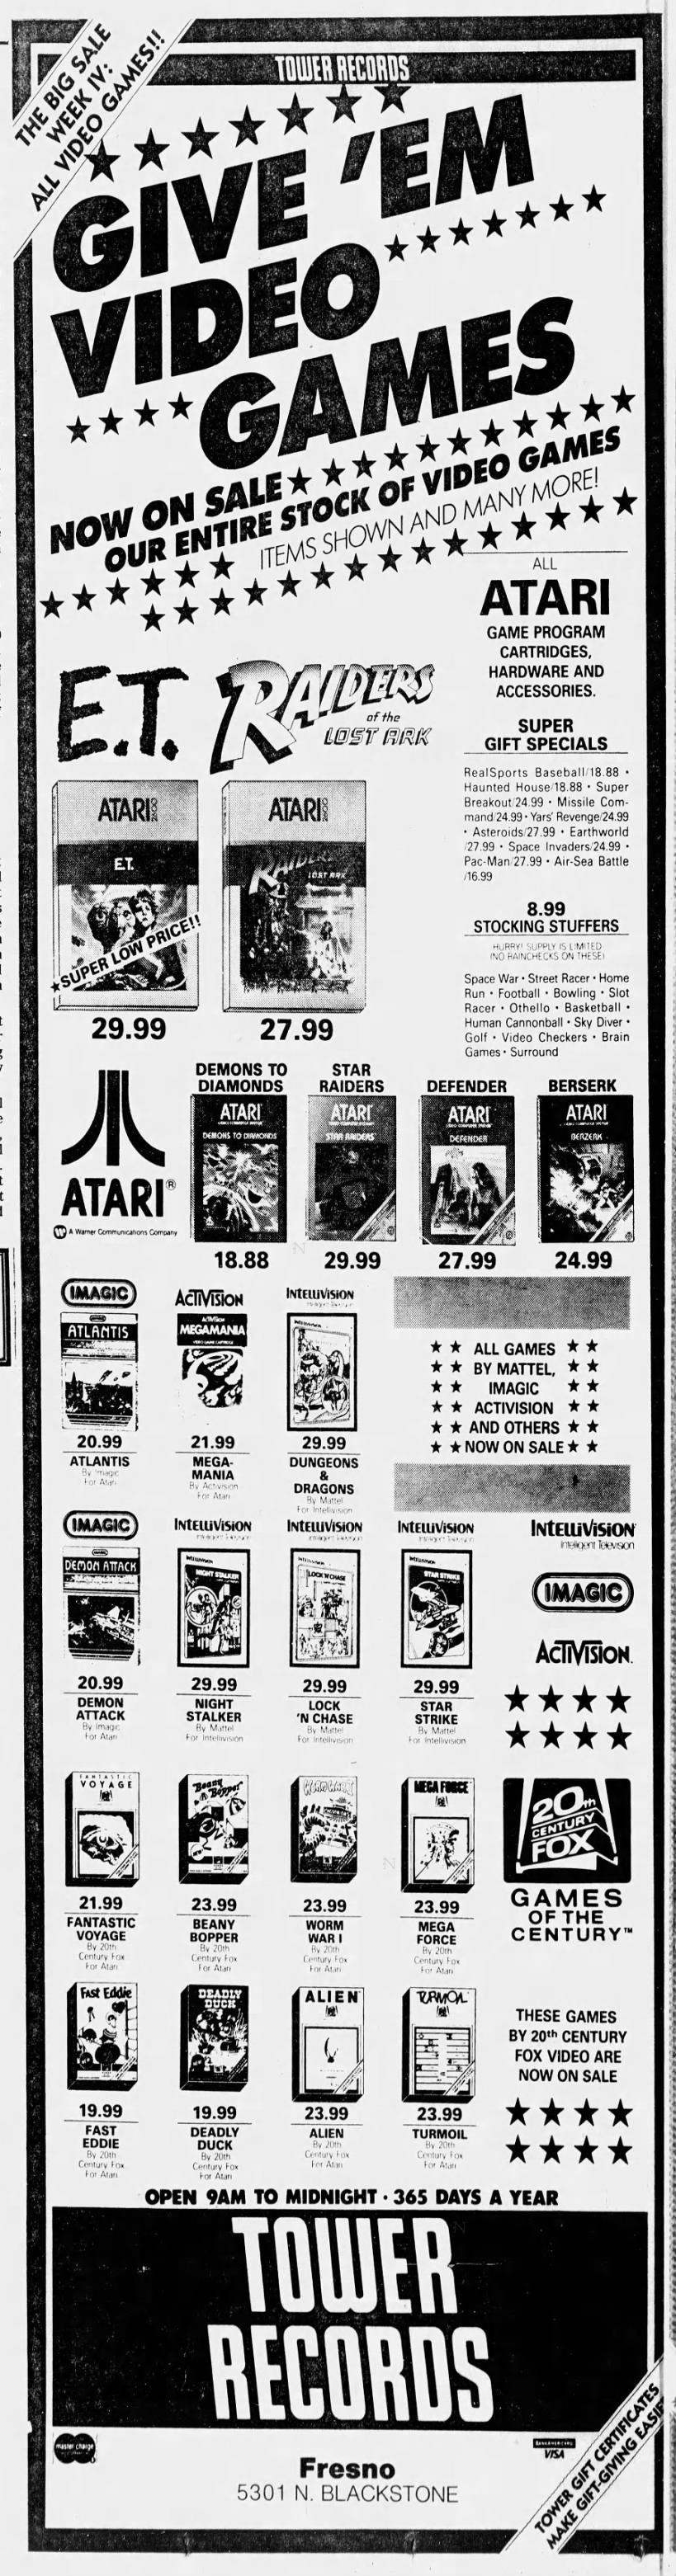 Atari 2600: Tower Records (Dec 17, 82)